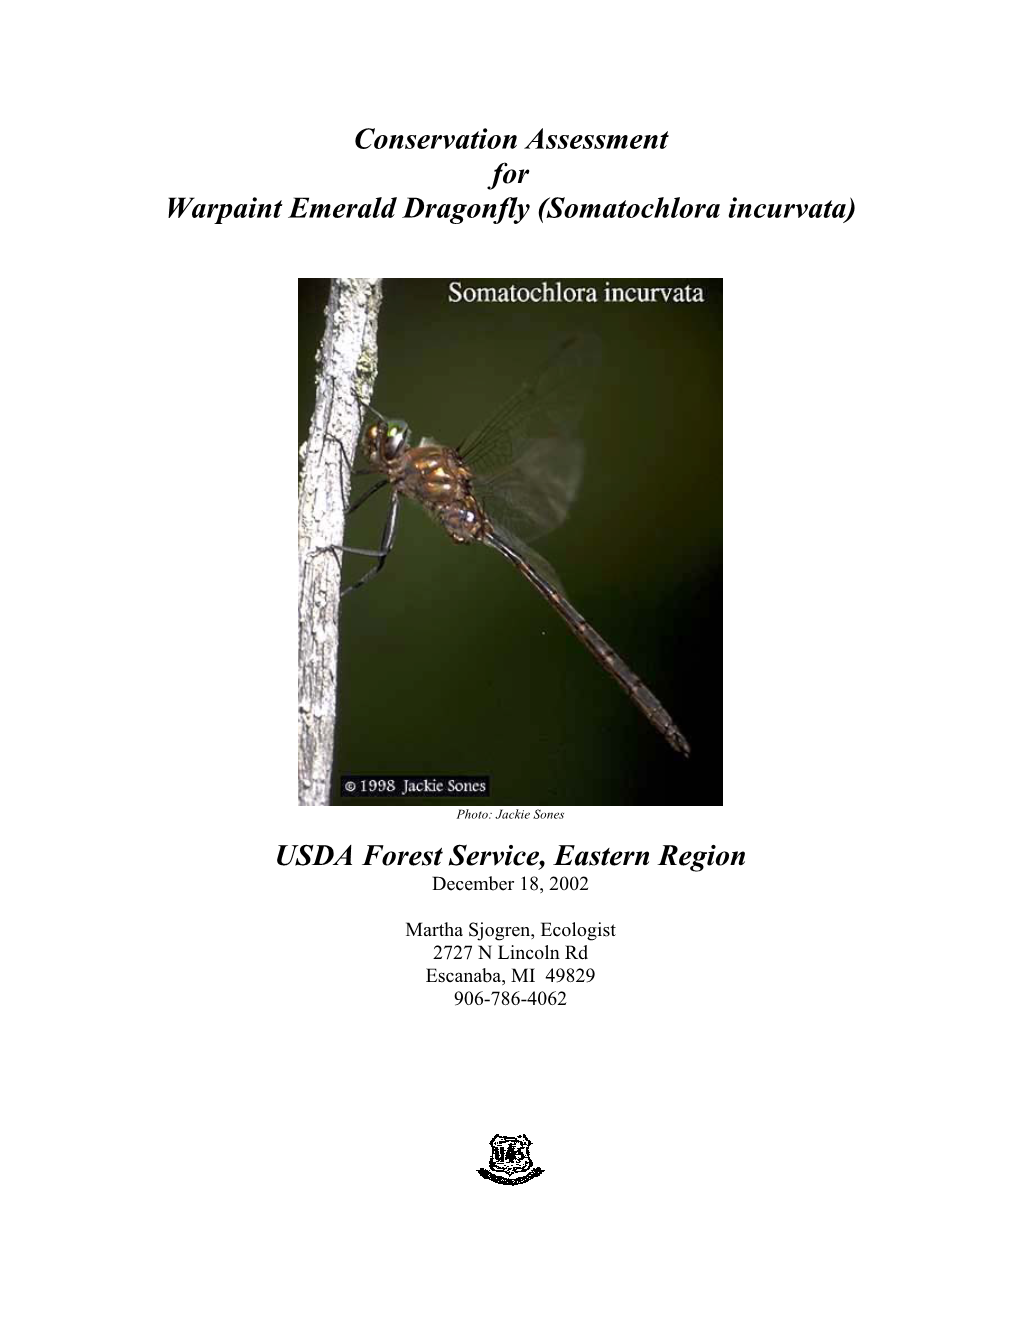 Conservation Assessment for Warpaint Emerald Dragonfly (Somatochlora Incurvata) USDA Forest Service, Eastern Region